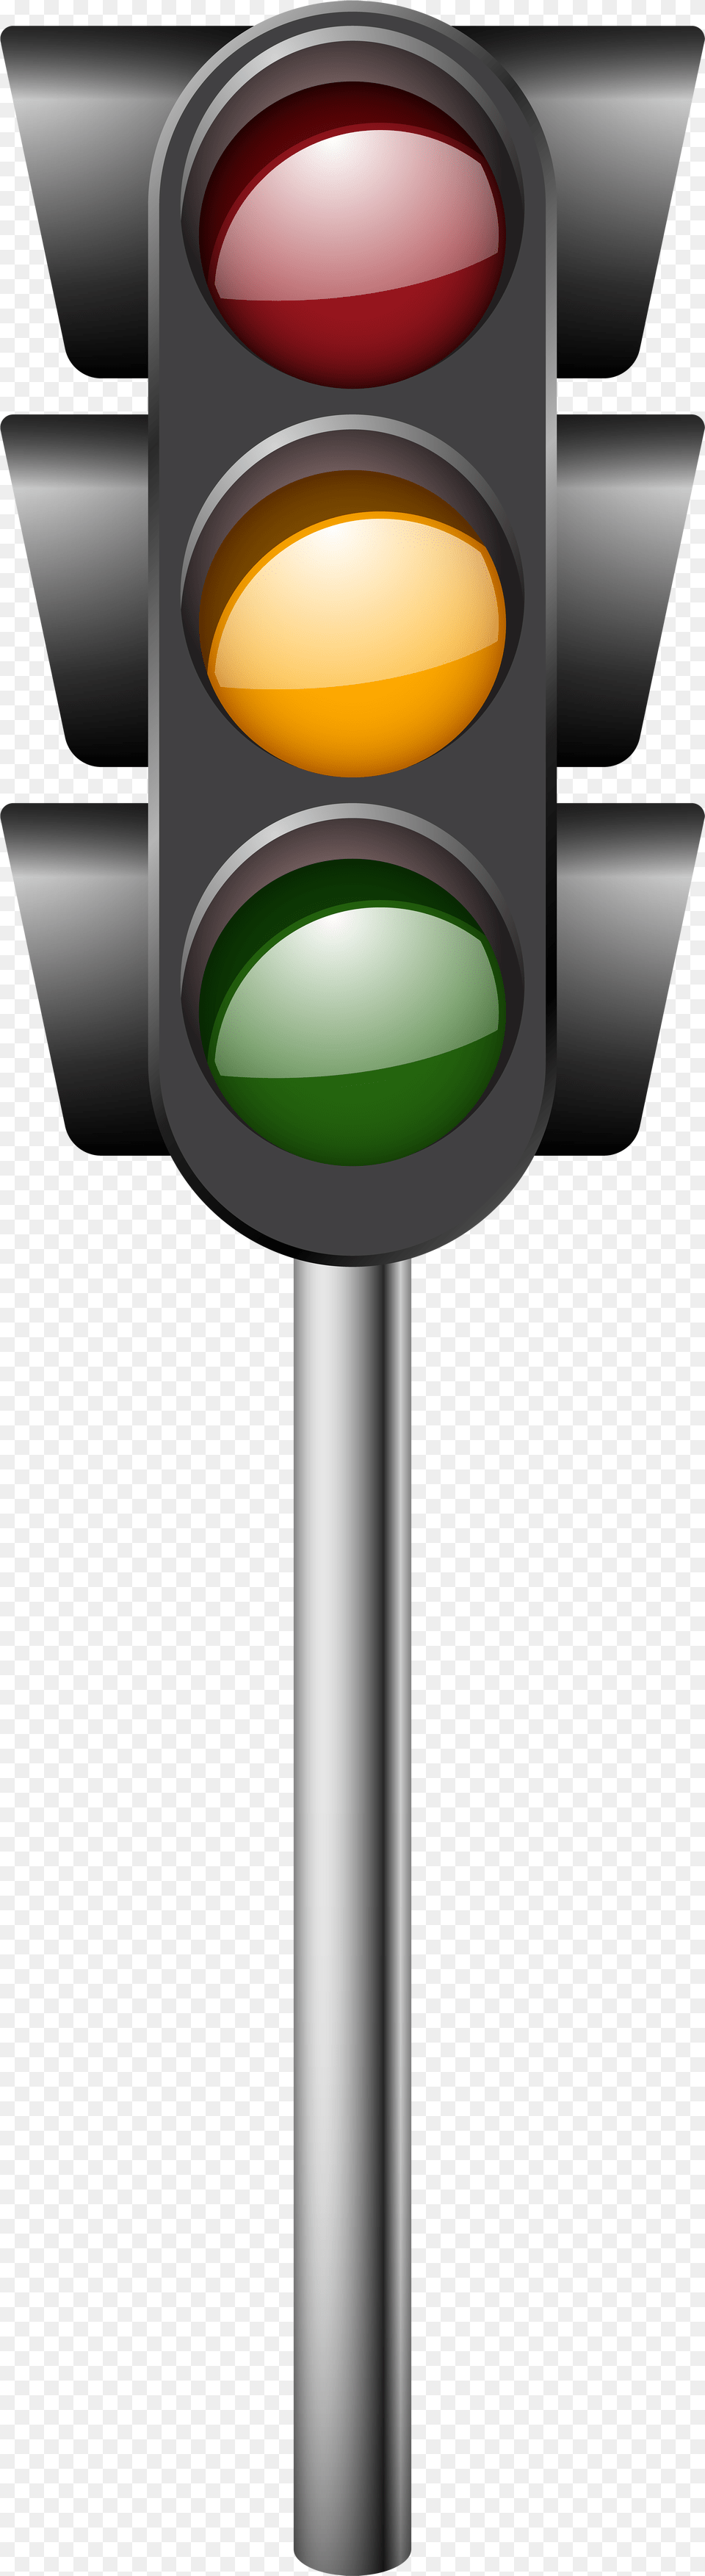 Traffic Light Clipart, Traffic Light Free Transparent Png